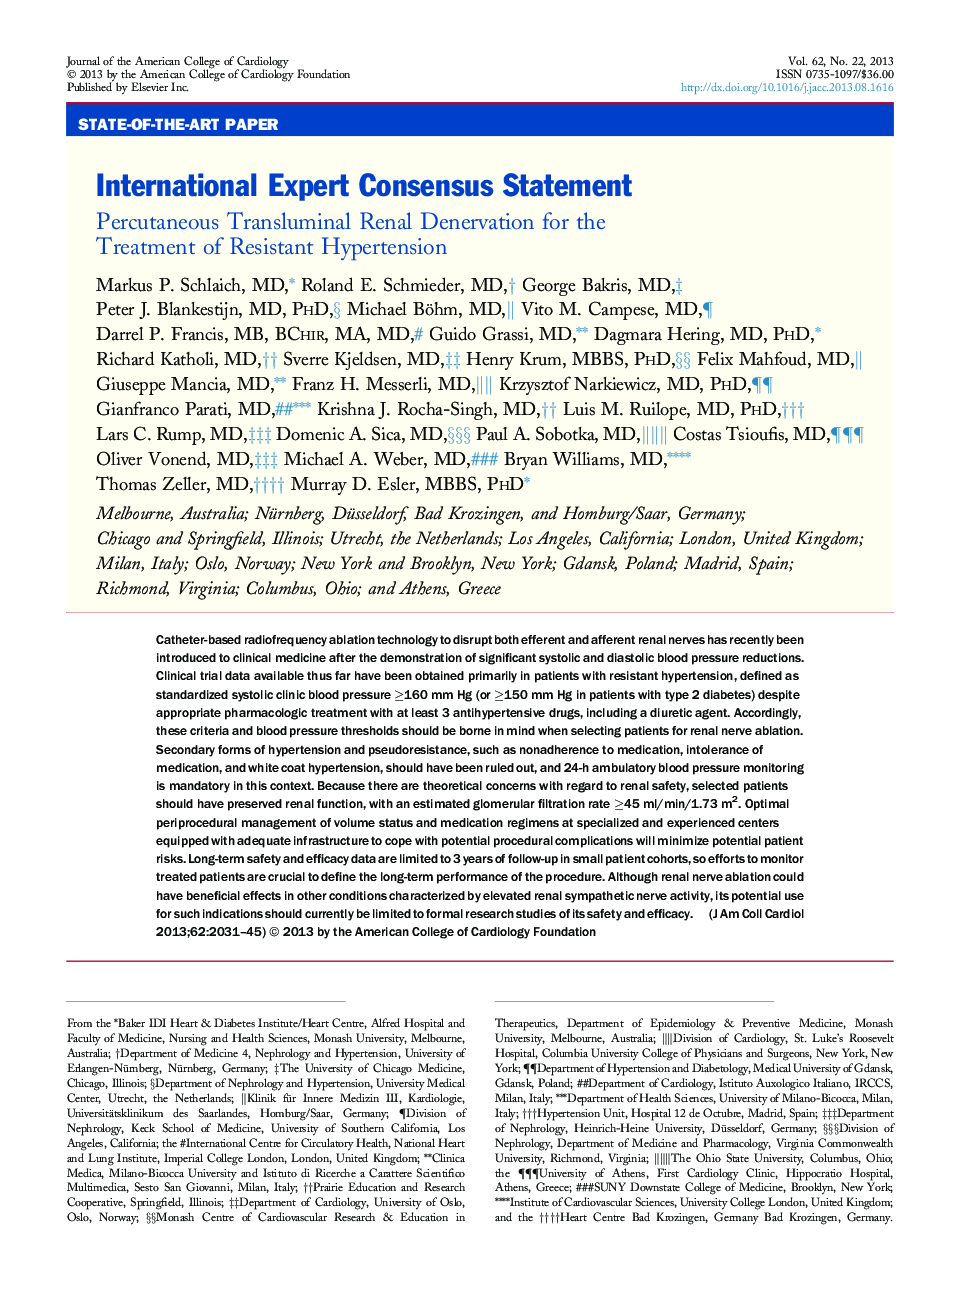 International Expert Consensus Statement : Percutaneous Transluminal Renal Denervation for the Treatment of Resistant Hypertension